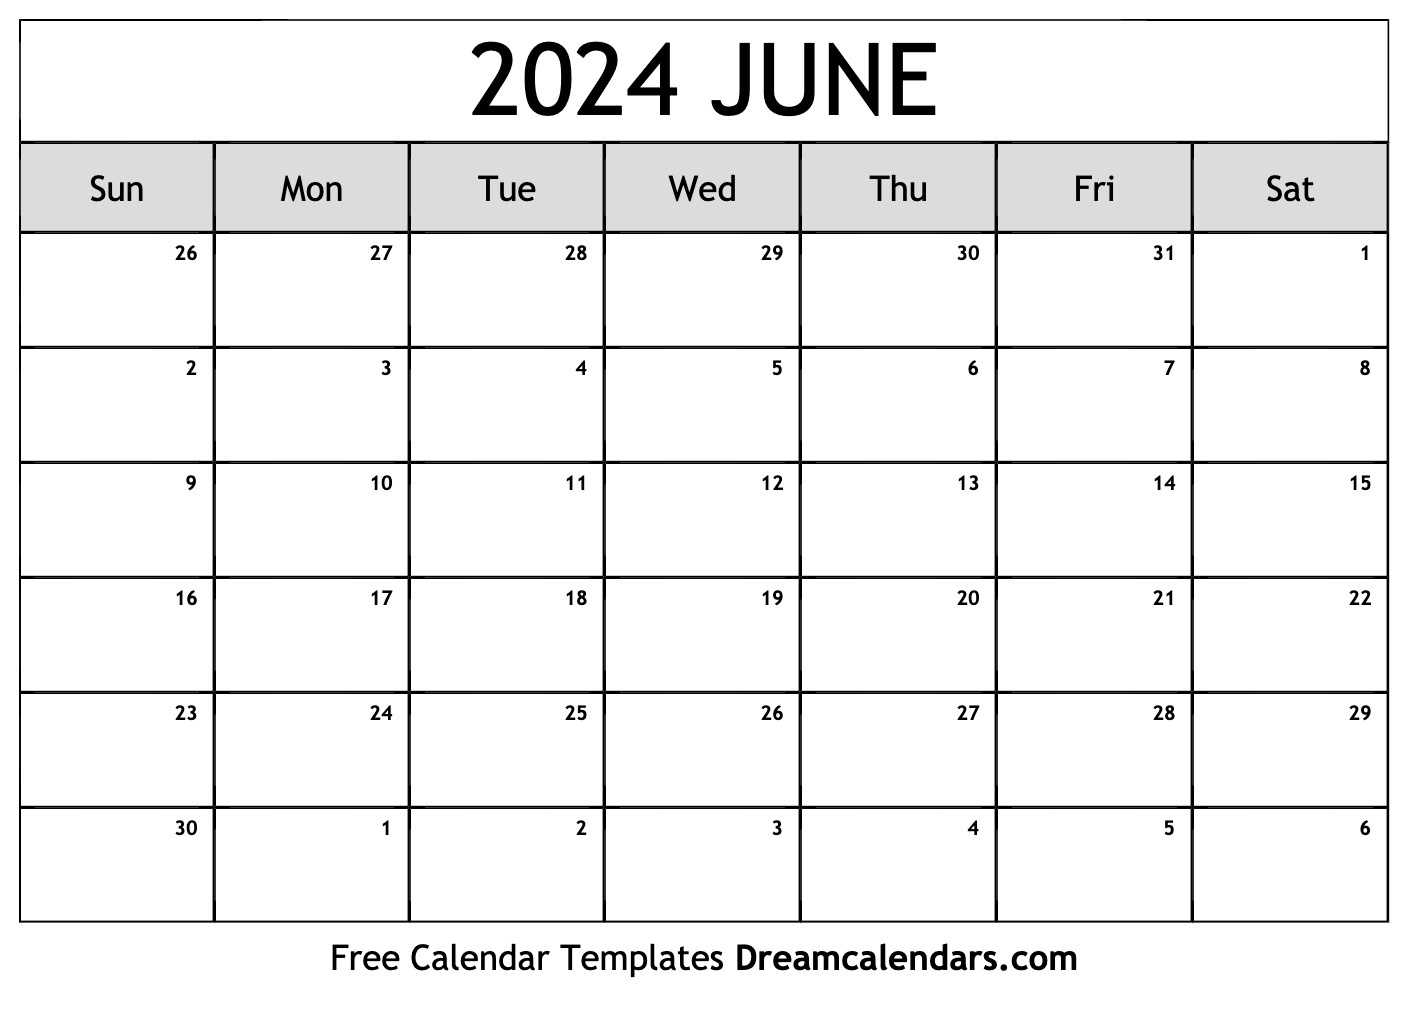 June 2024 Calendar - Free Printable With Holidays And Observances regarding June 13 2024 Calendar